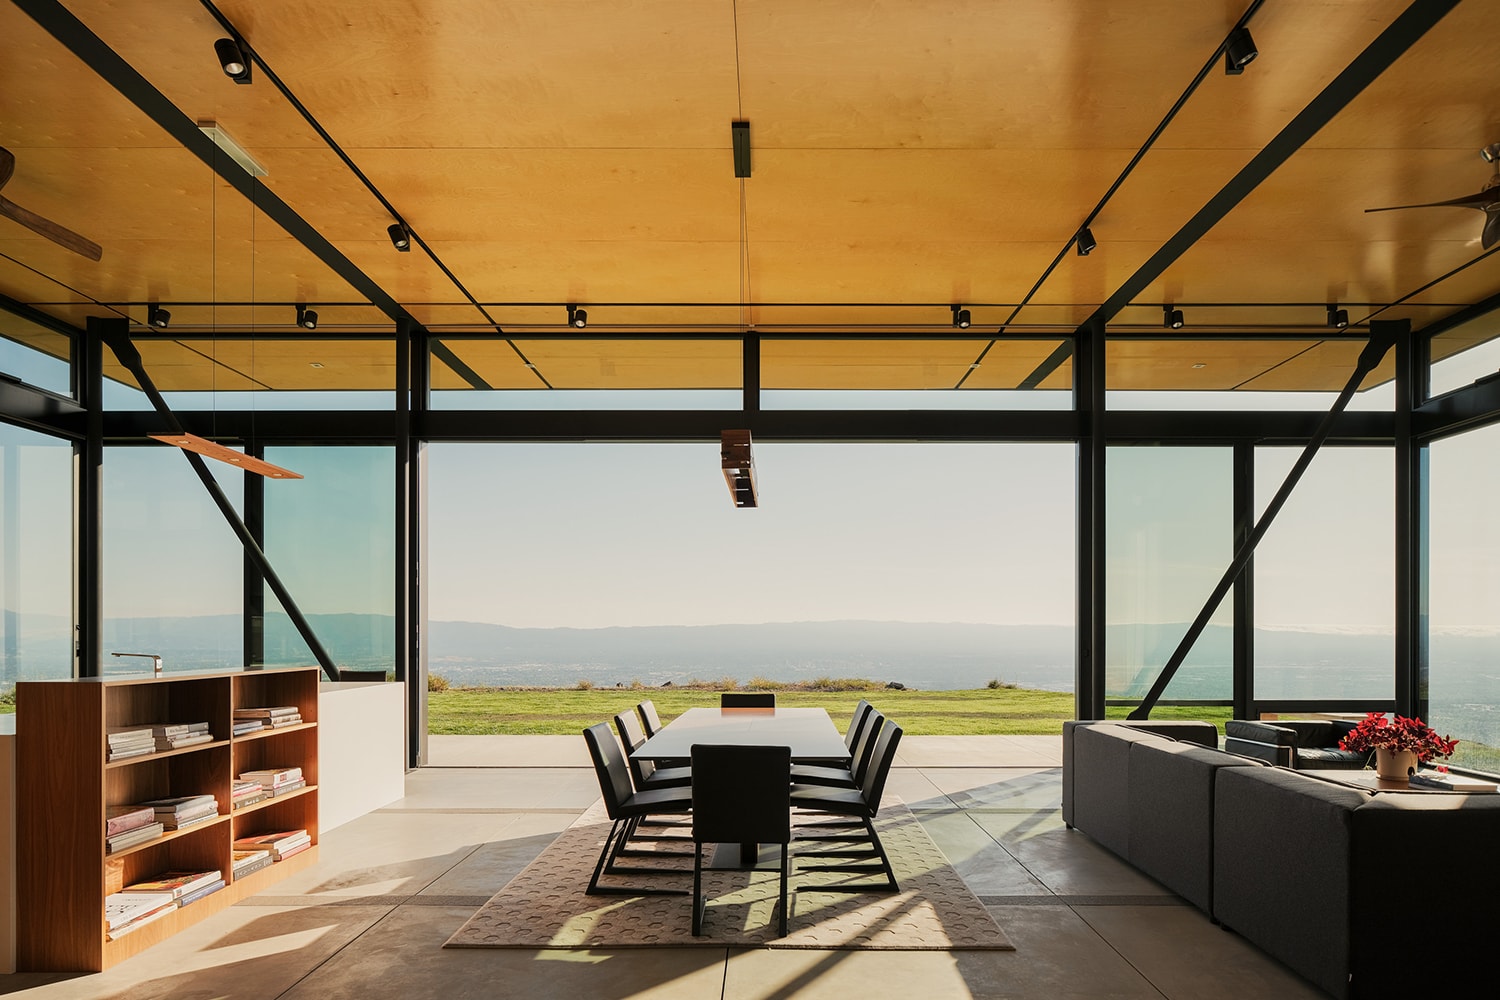 The Pavilion Home by Feldman Architecture san jose silicon valley california joe fletcher photographs info concrete design 